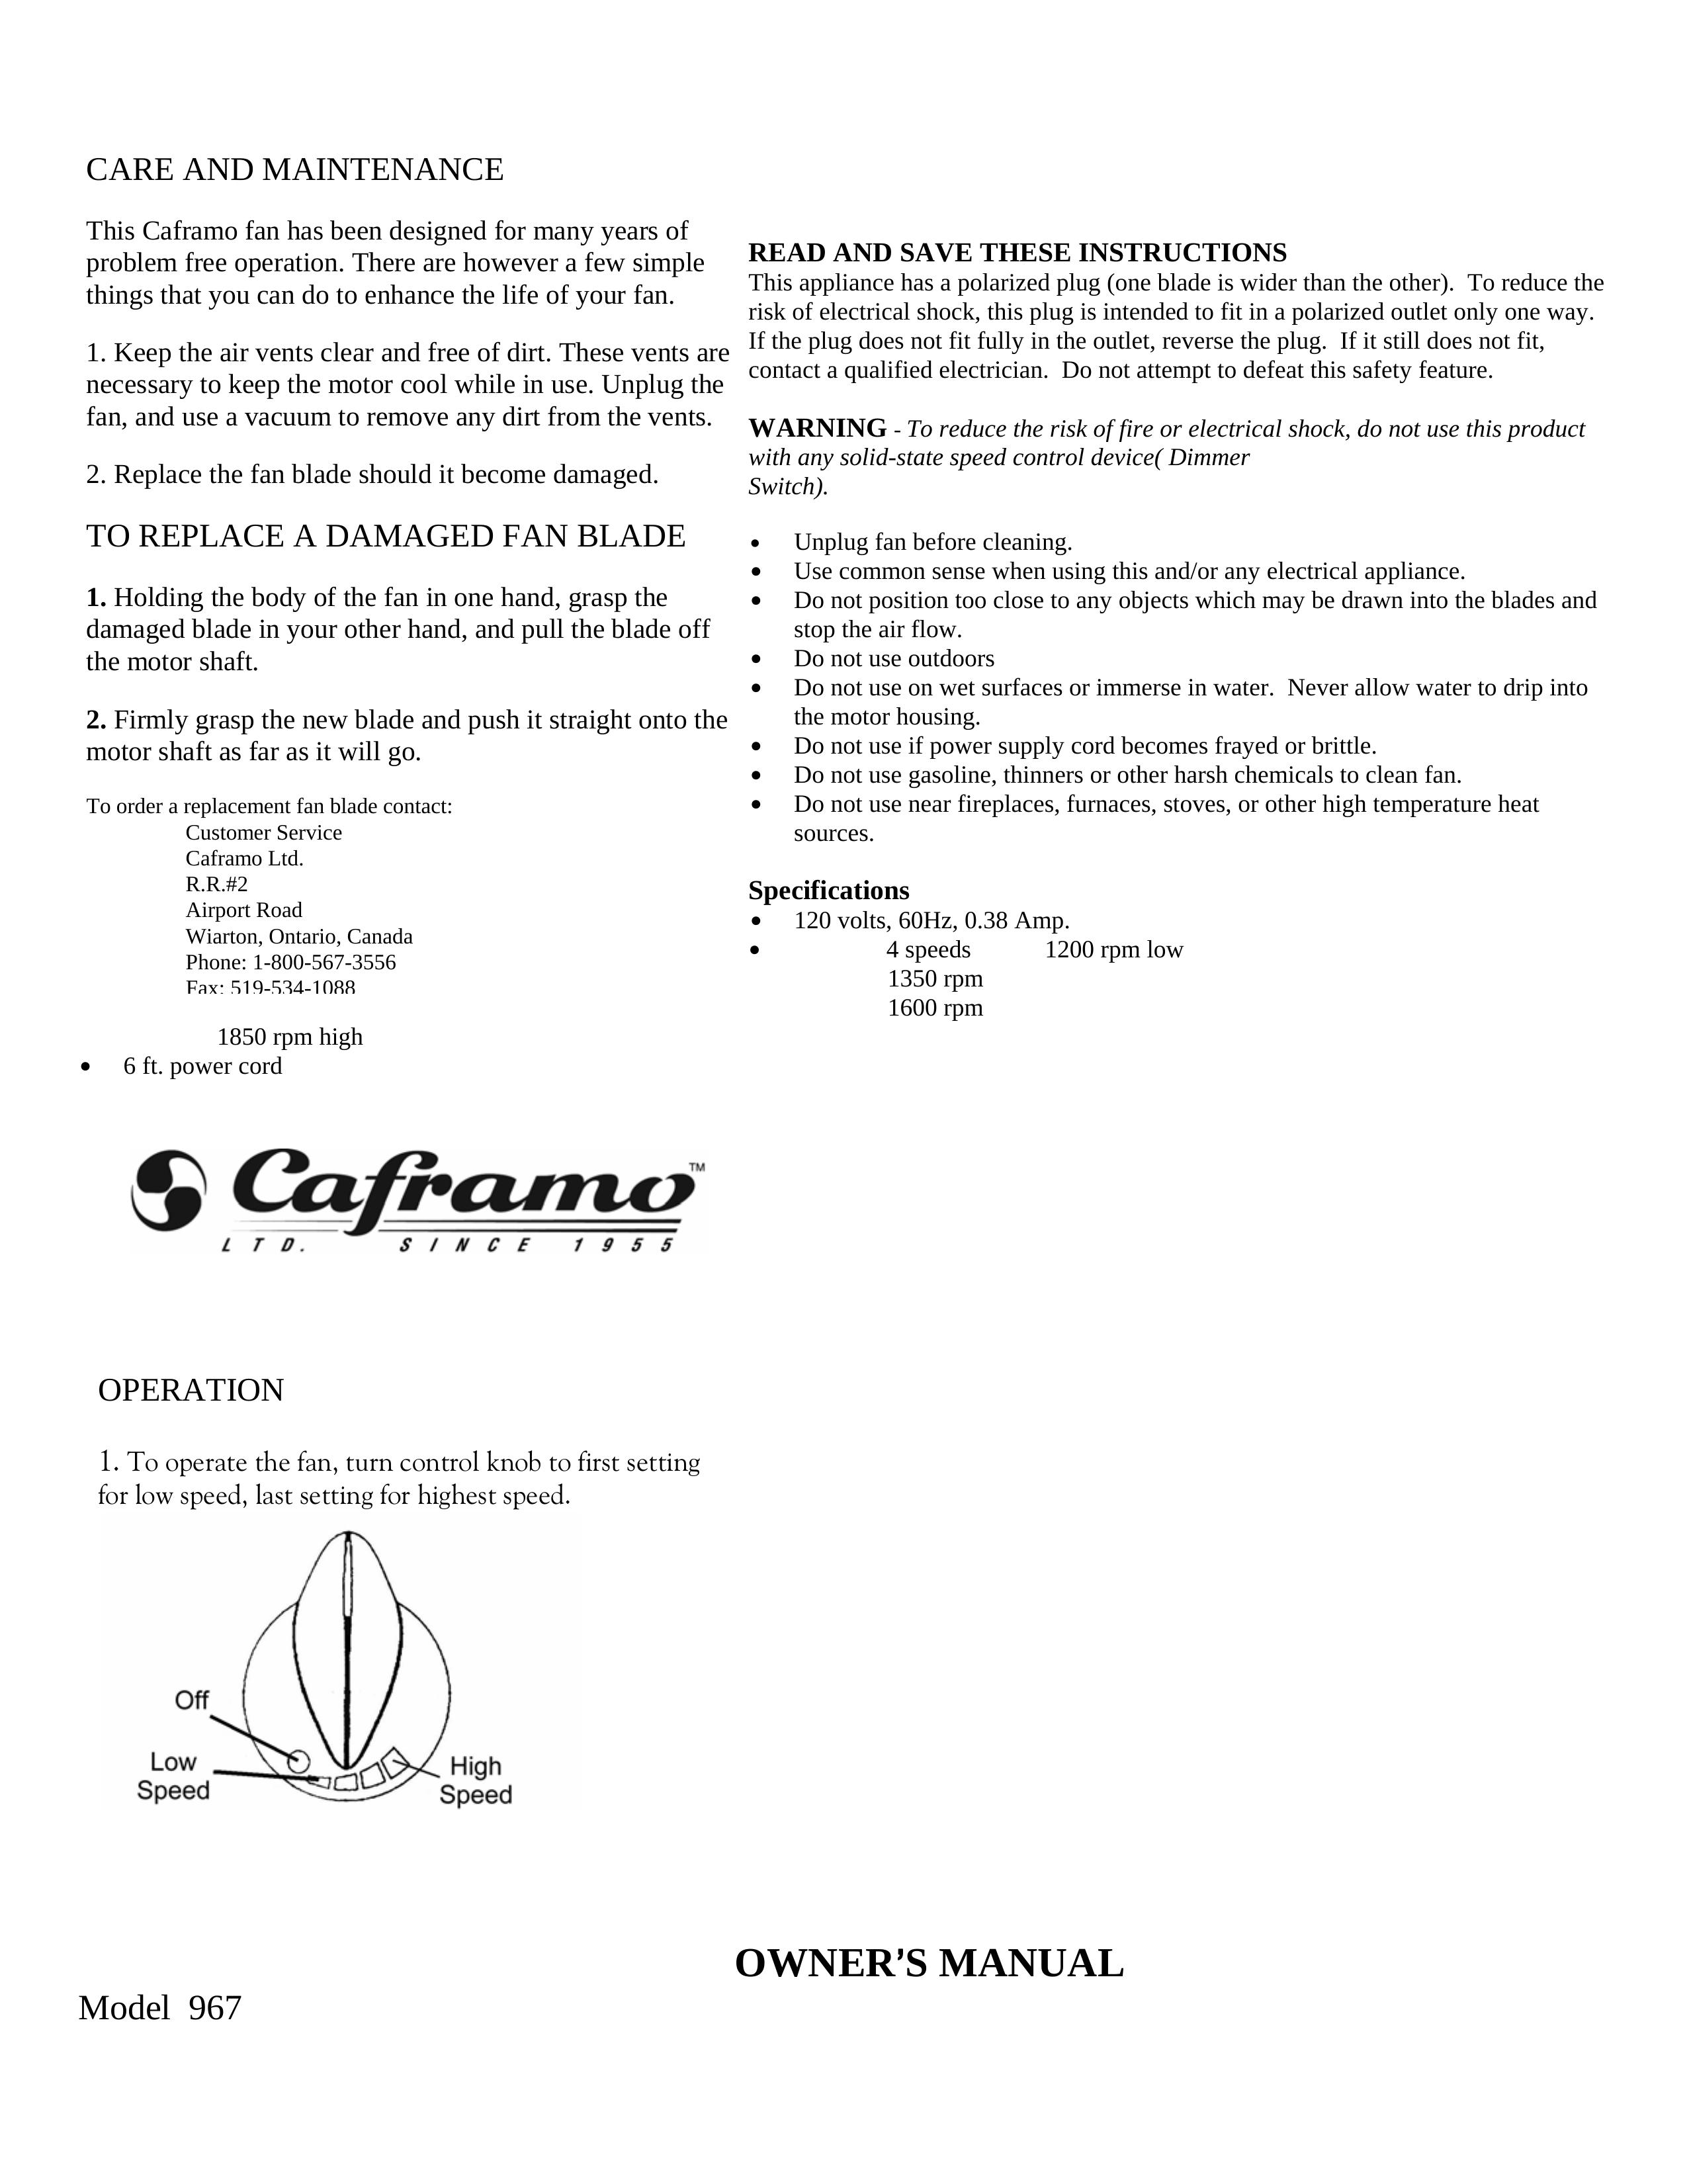 Caframo 967 Ventilation Hood User Manual